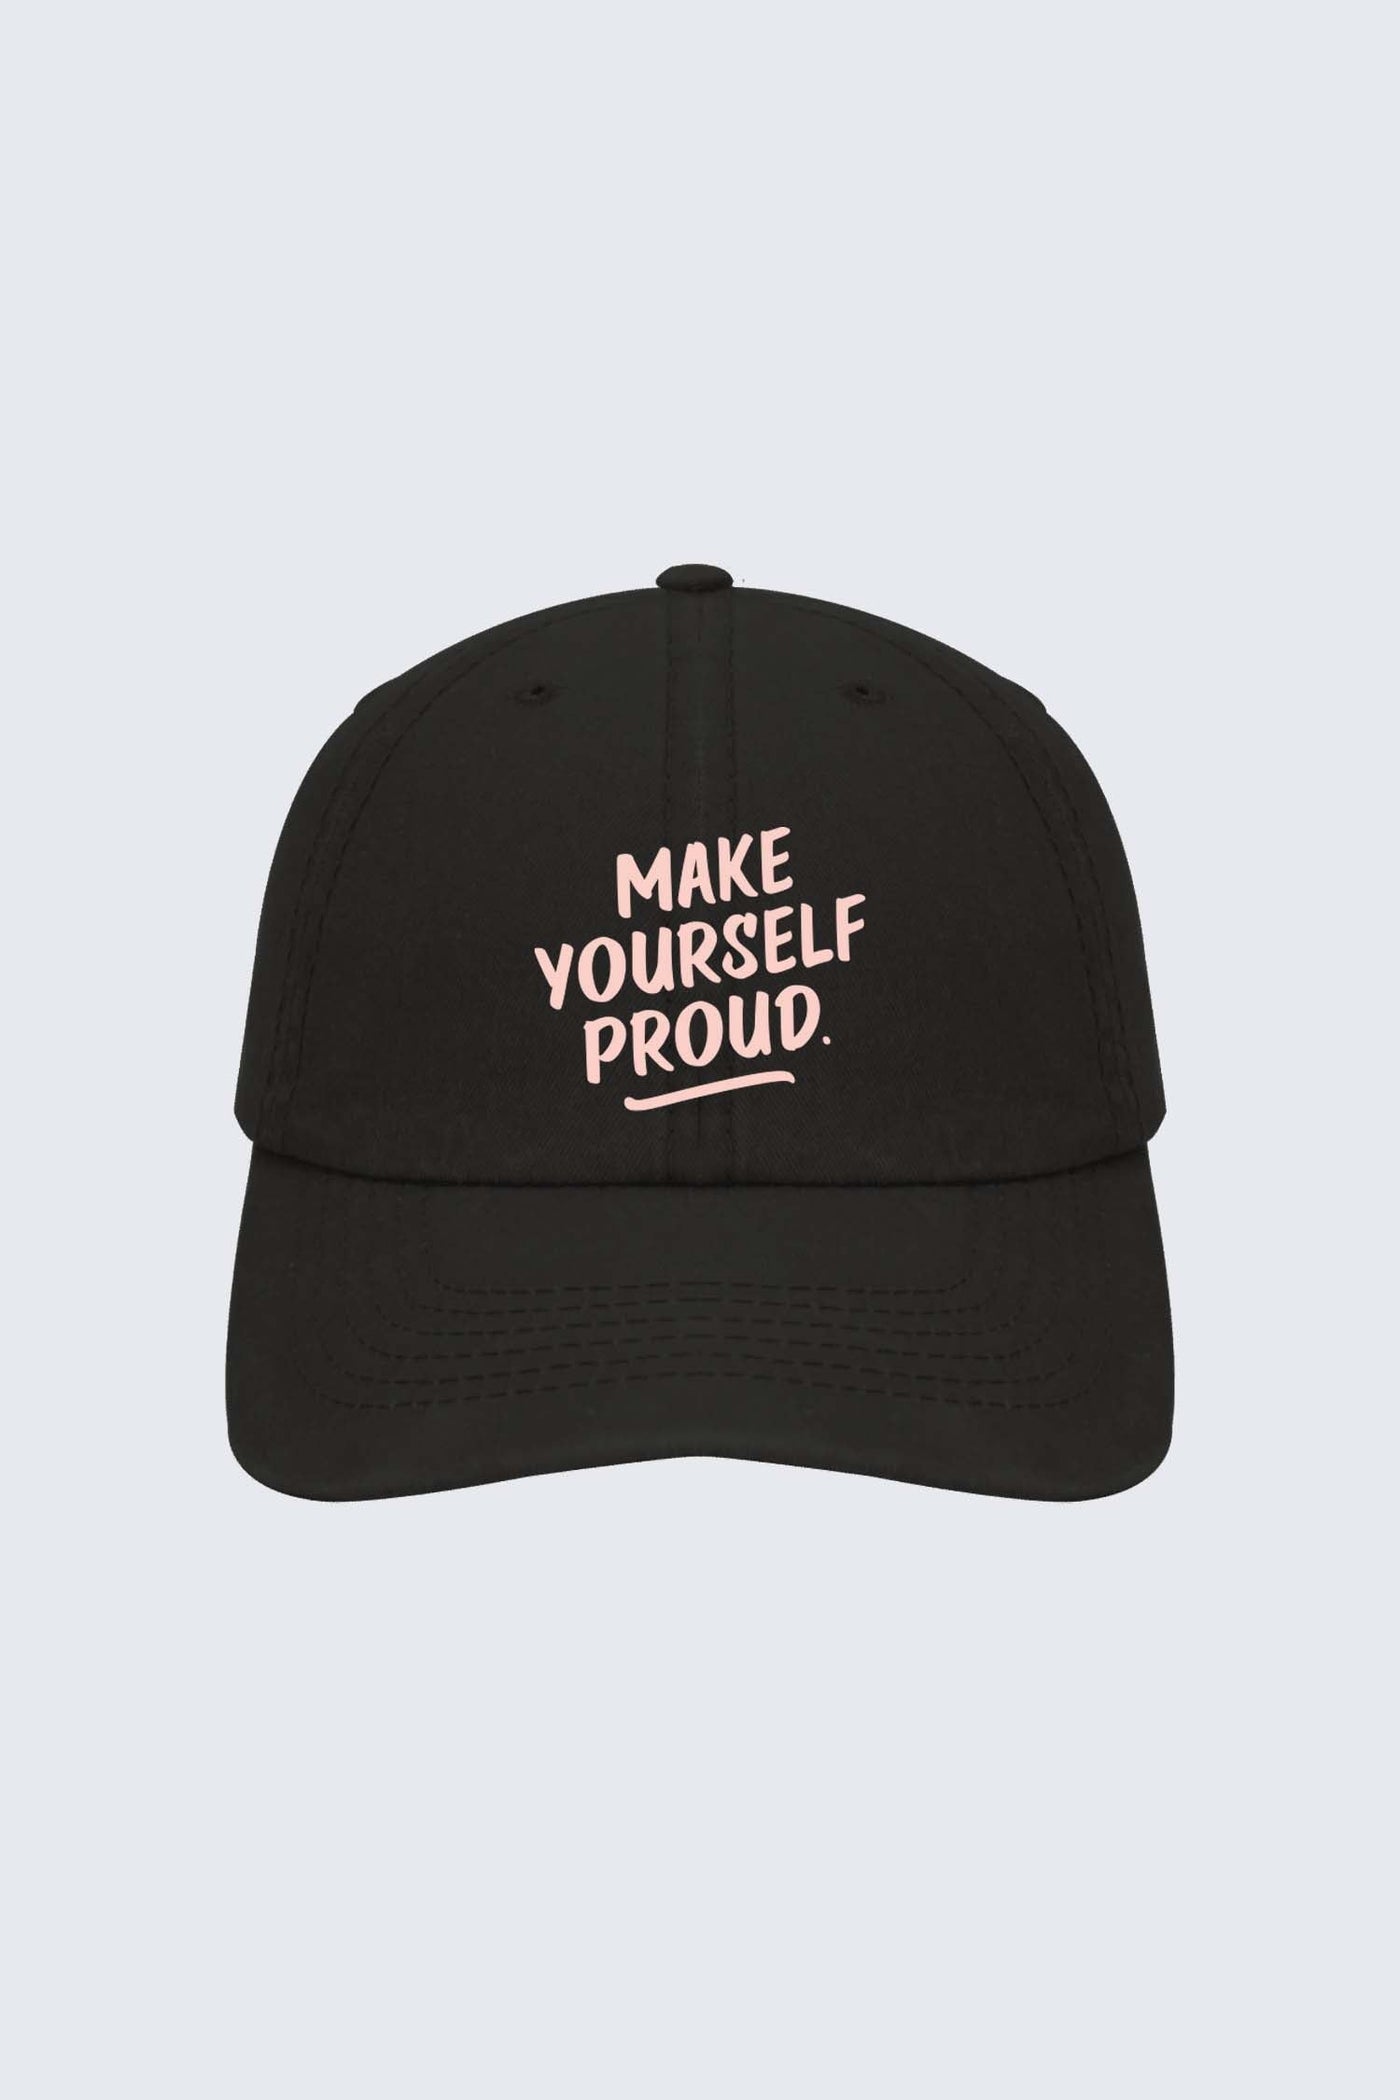 Make Yourself Proud Cap Black Caps Selfawear 